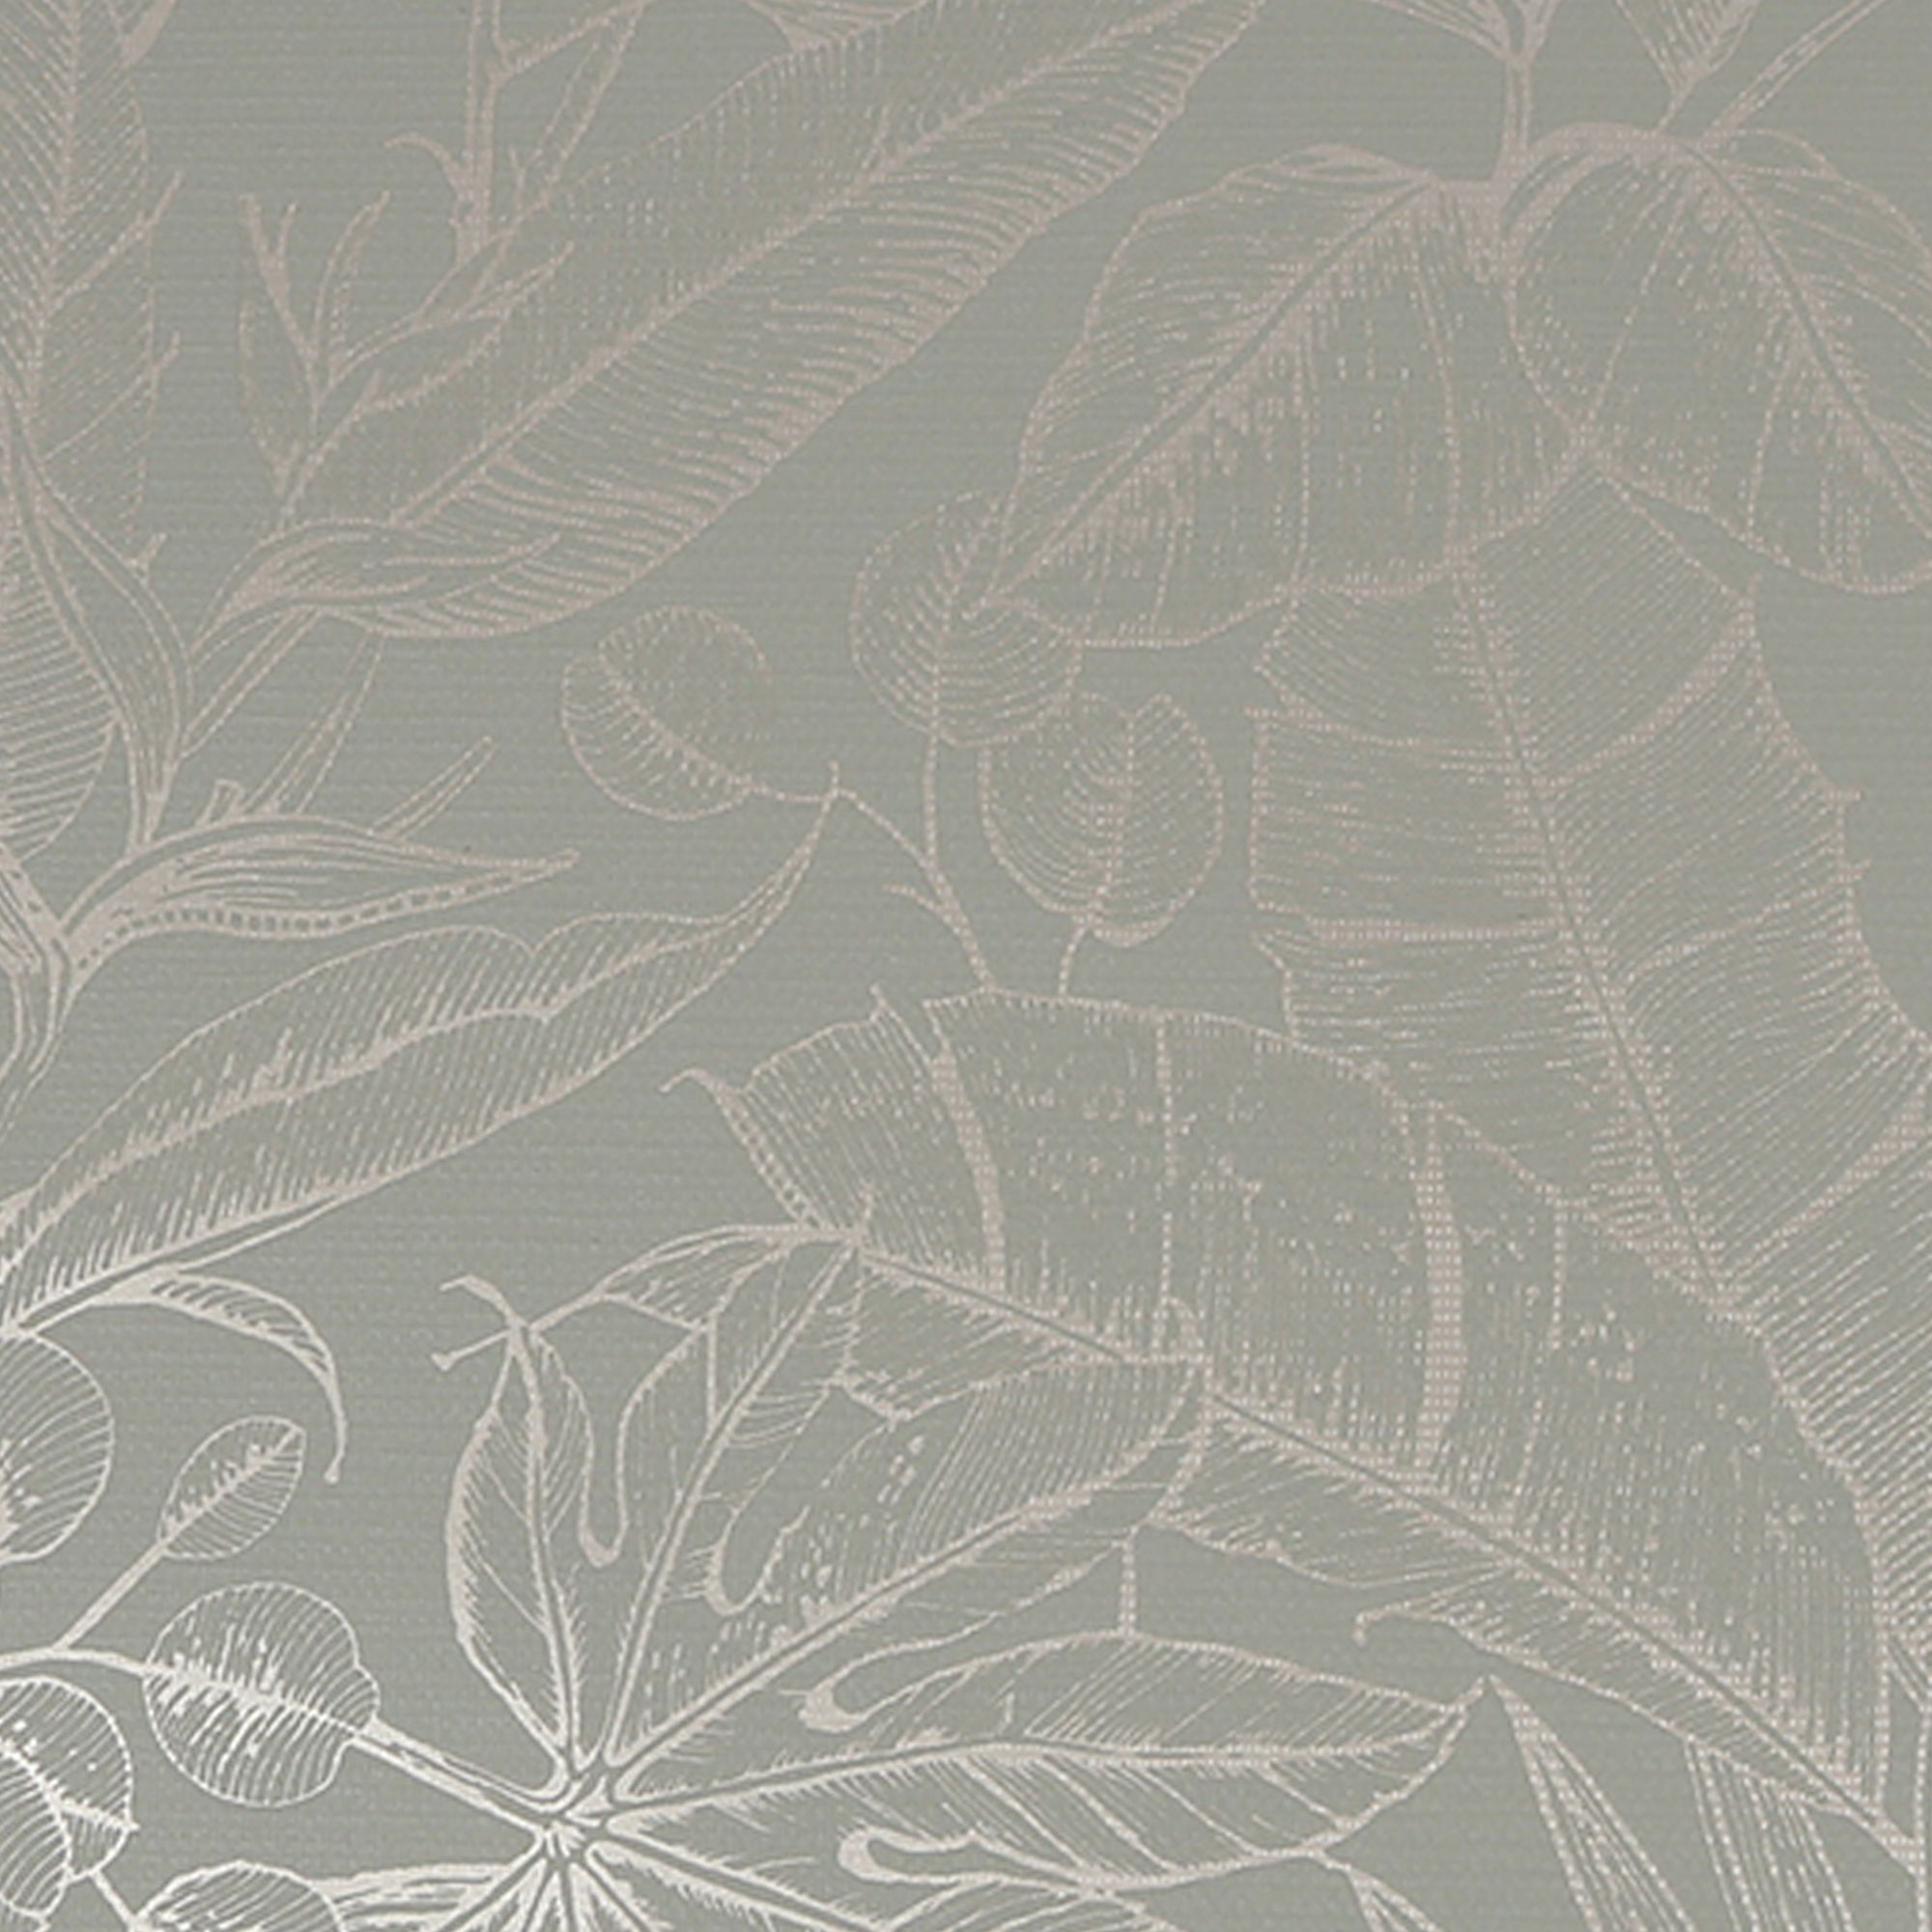 Boutique Green Metallic effect Leaf Textured Wallpaper Sample